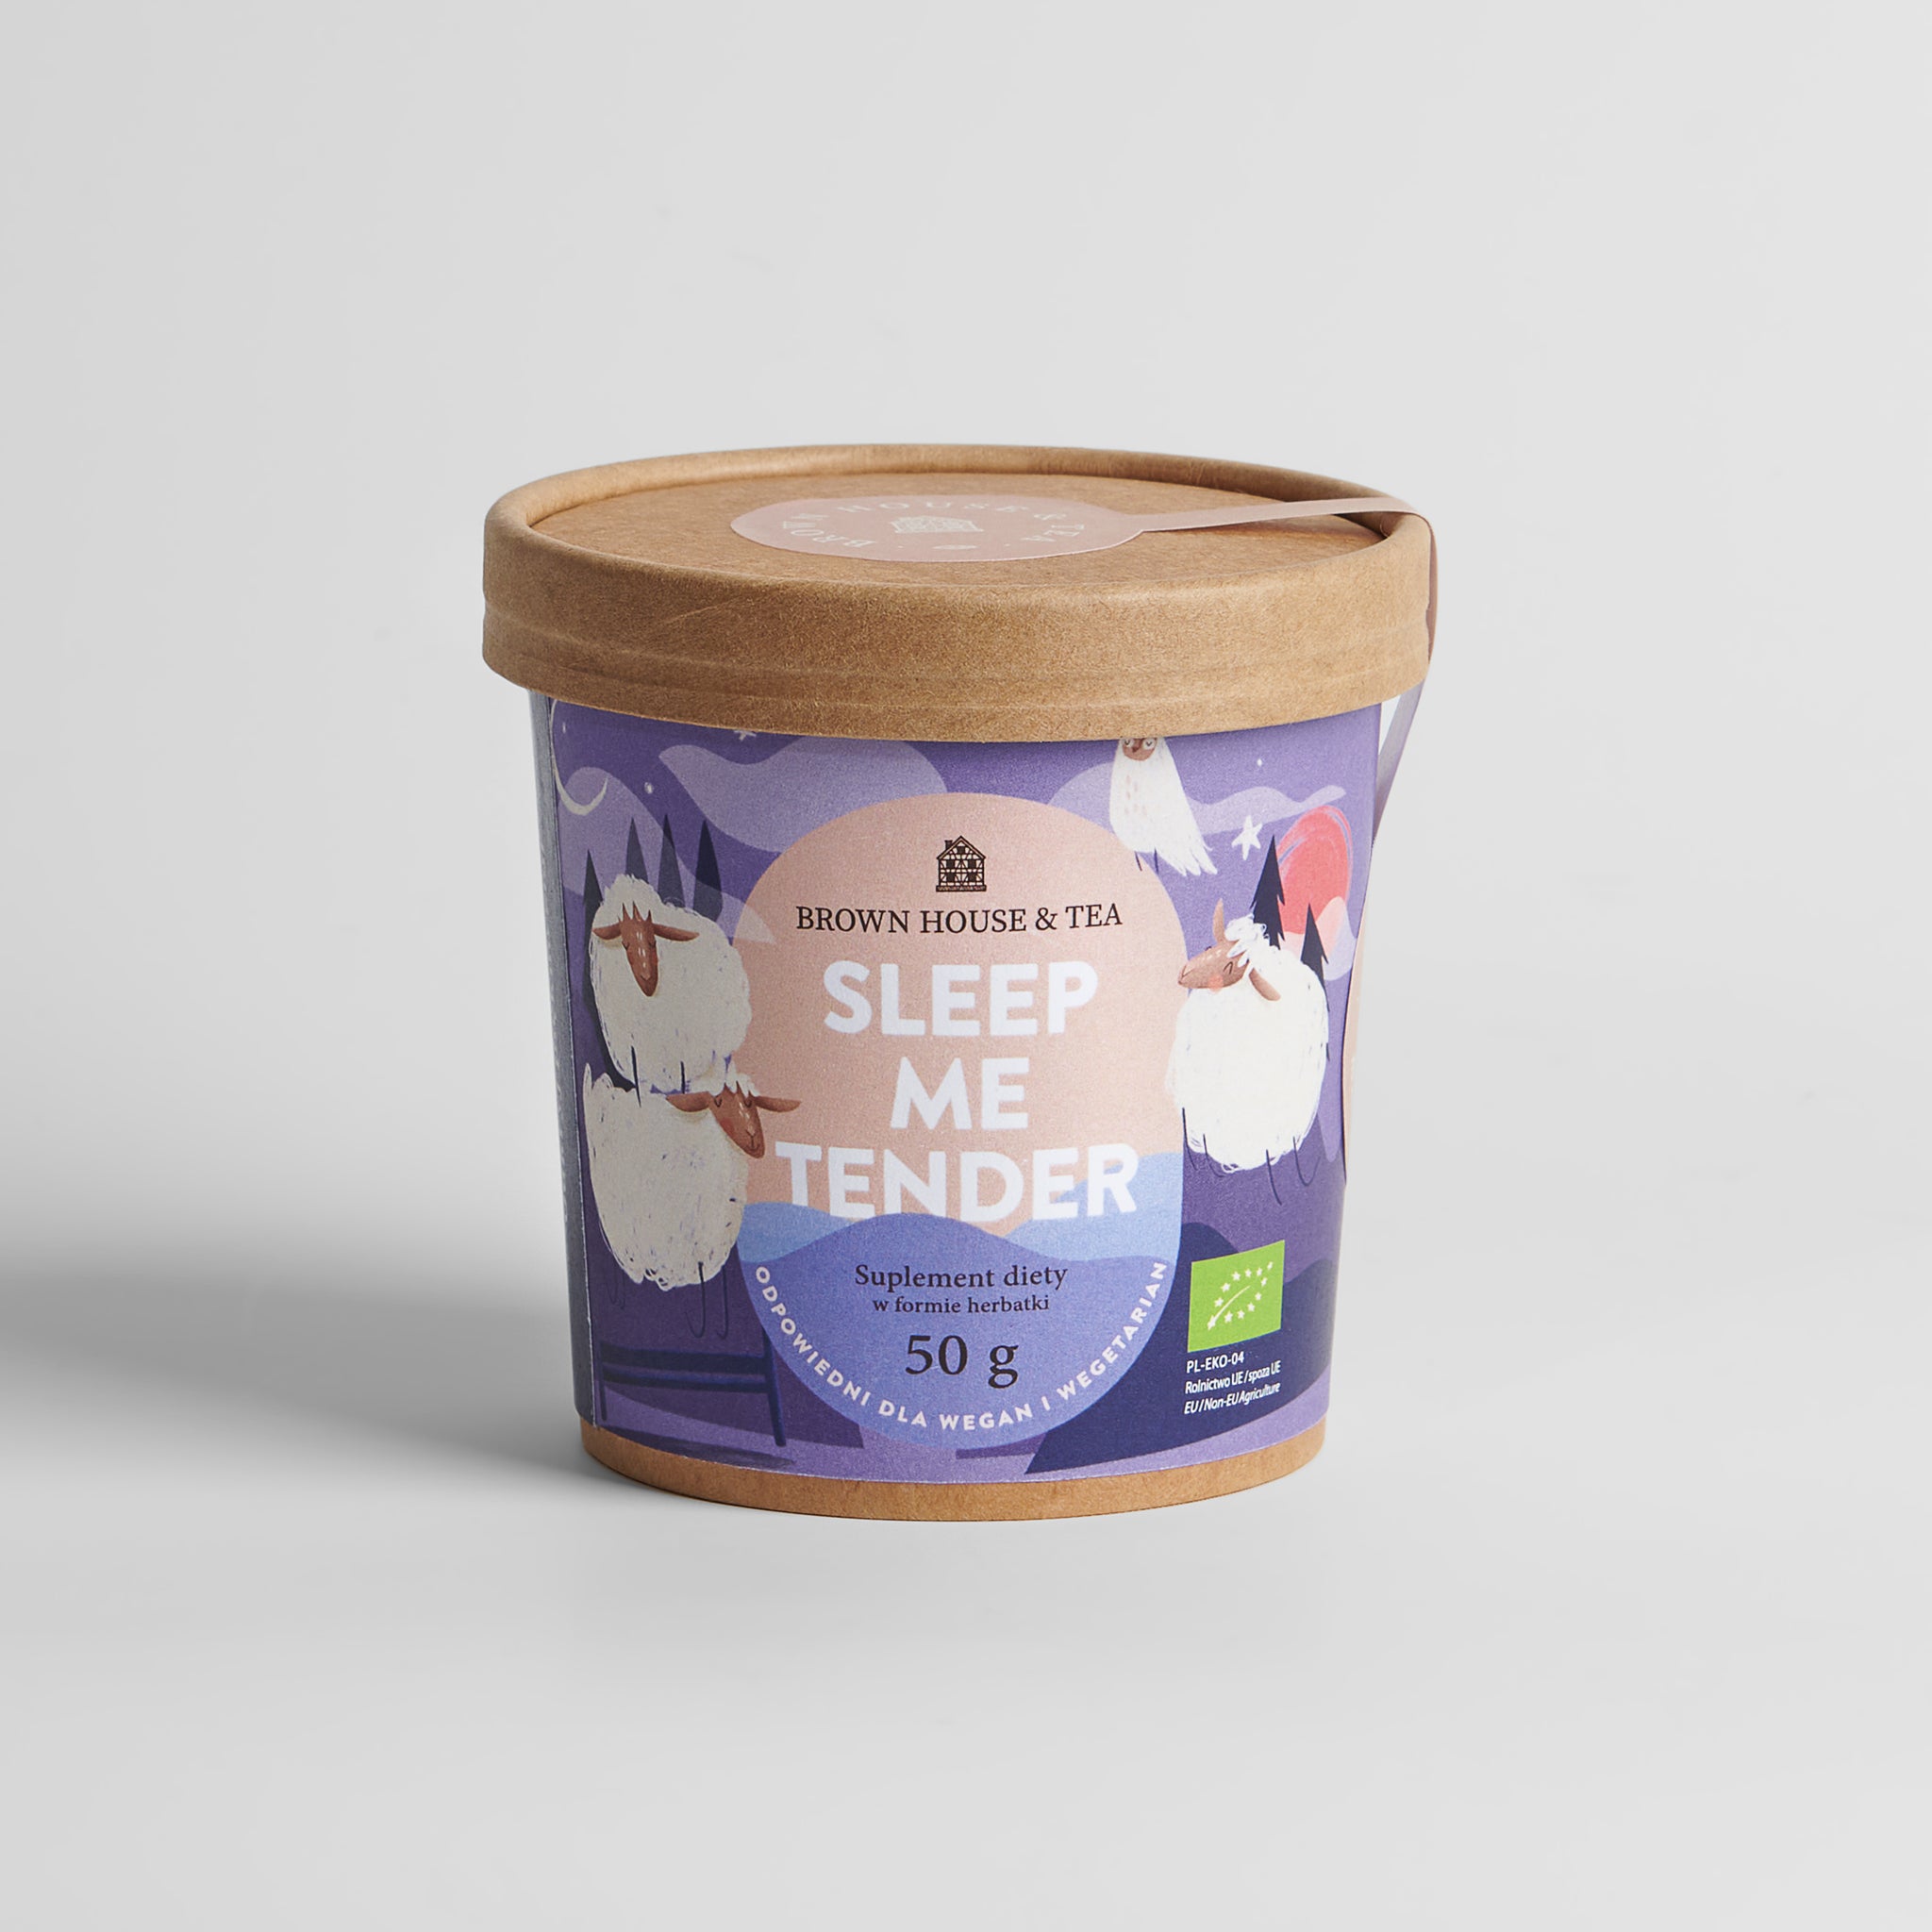 SLEEP ME TENDER - dietary supplement for sleep